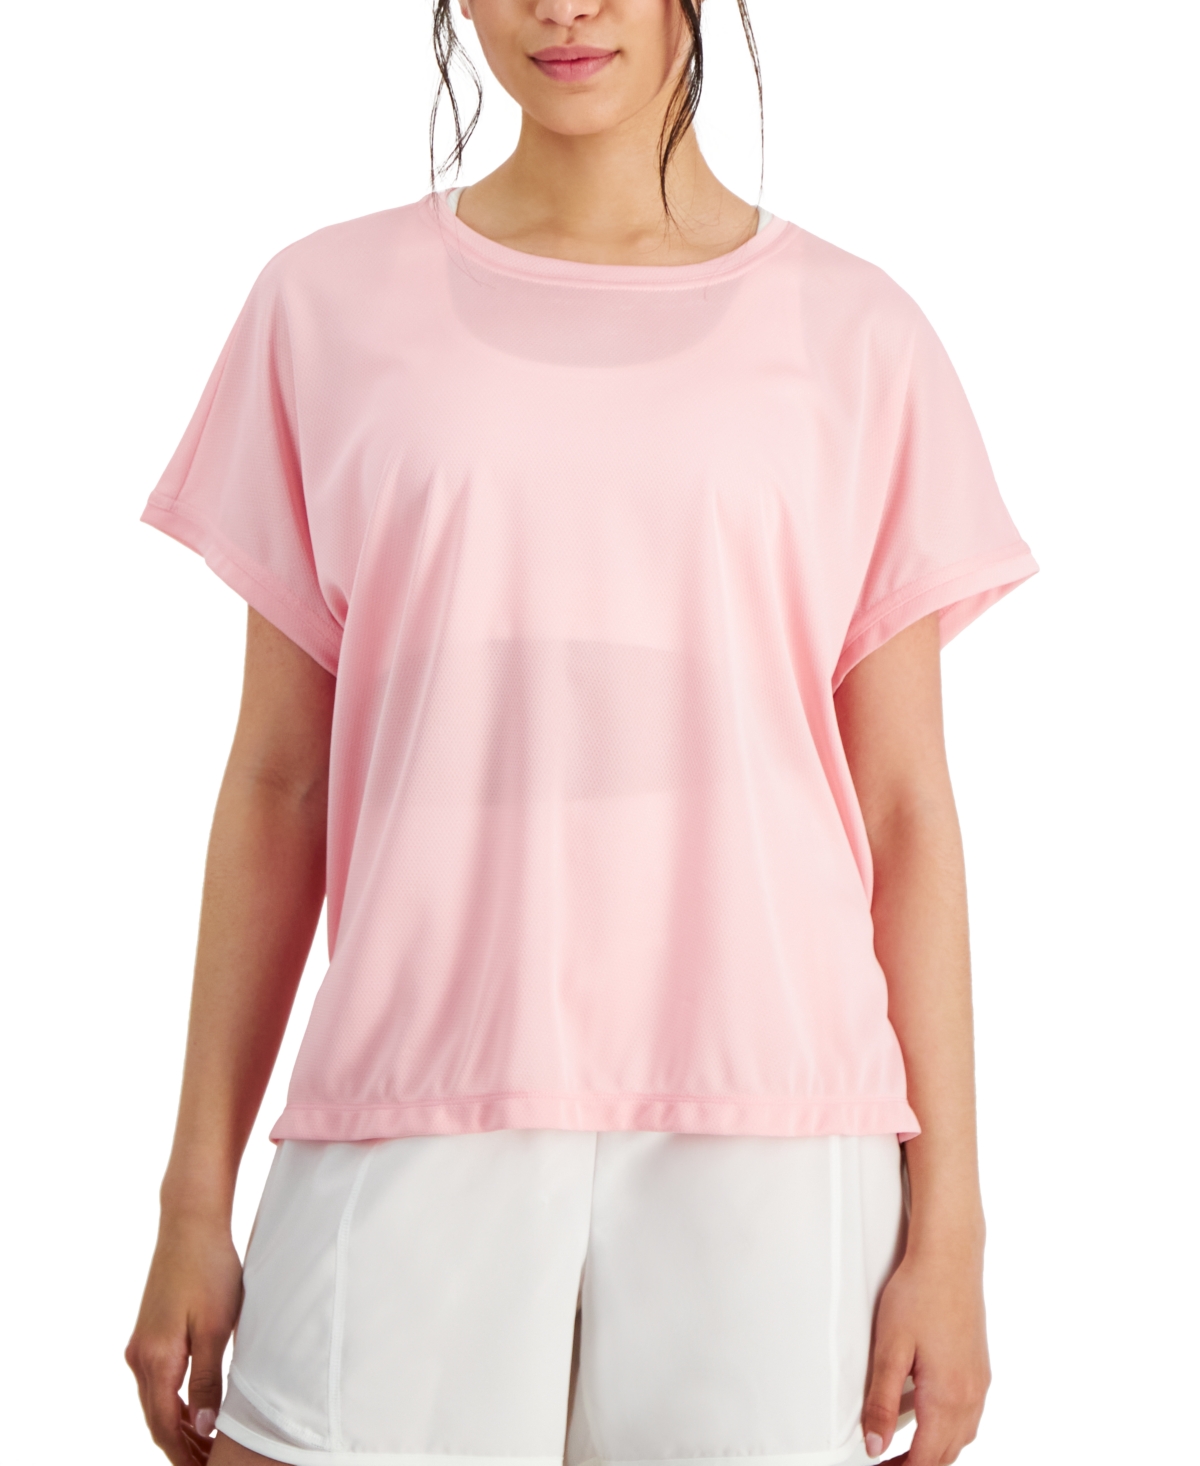 Women's Birdseye-Mesh Dolman-Sleeve Top, Created for Macy's - Pink Icing